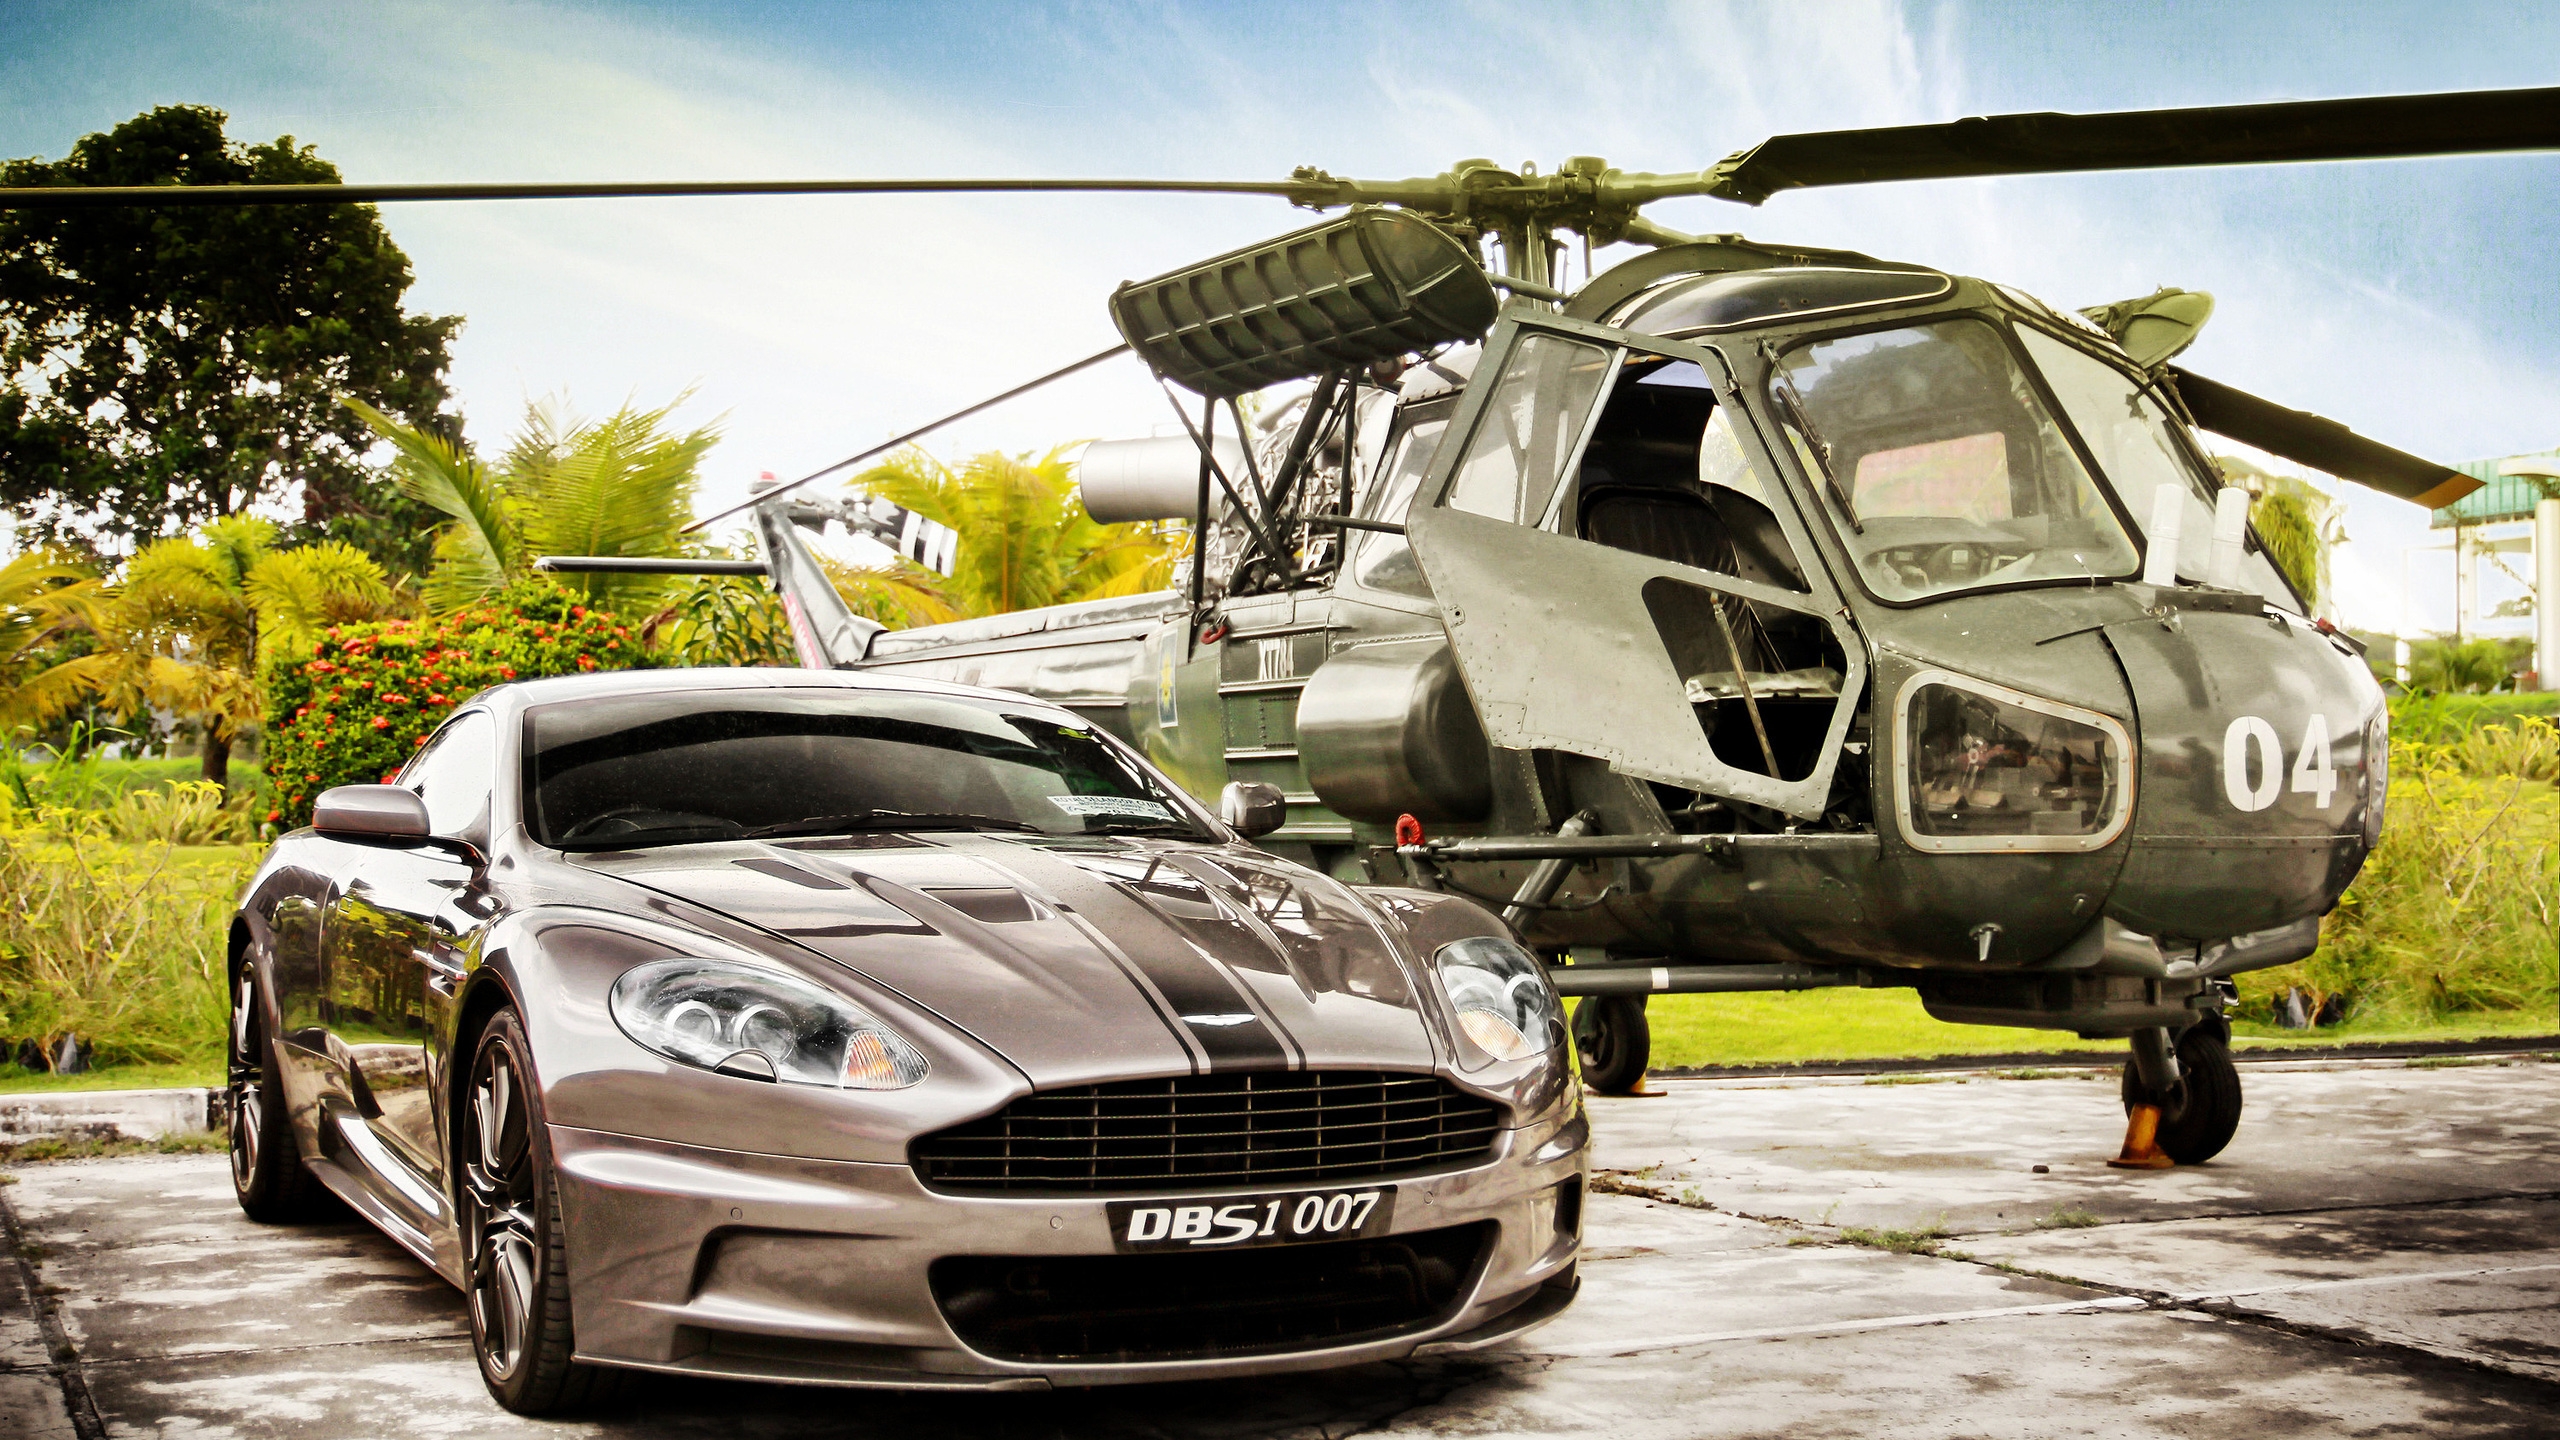 James Bond Aston Martin DBS V12 for 2560x1440 HDTV resolution